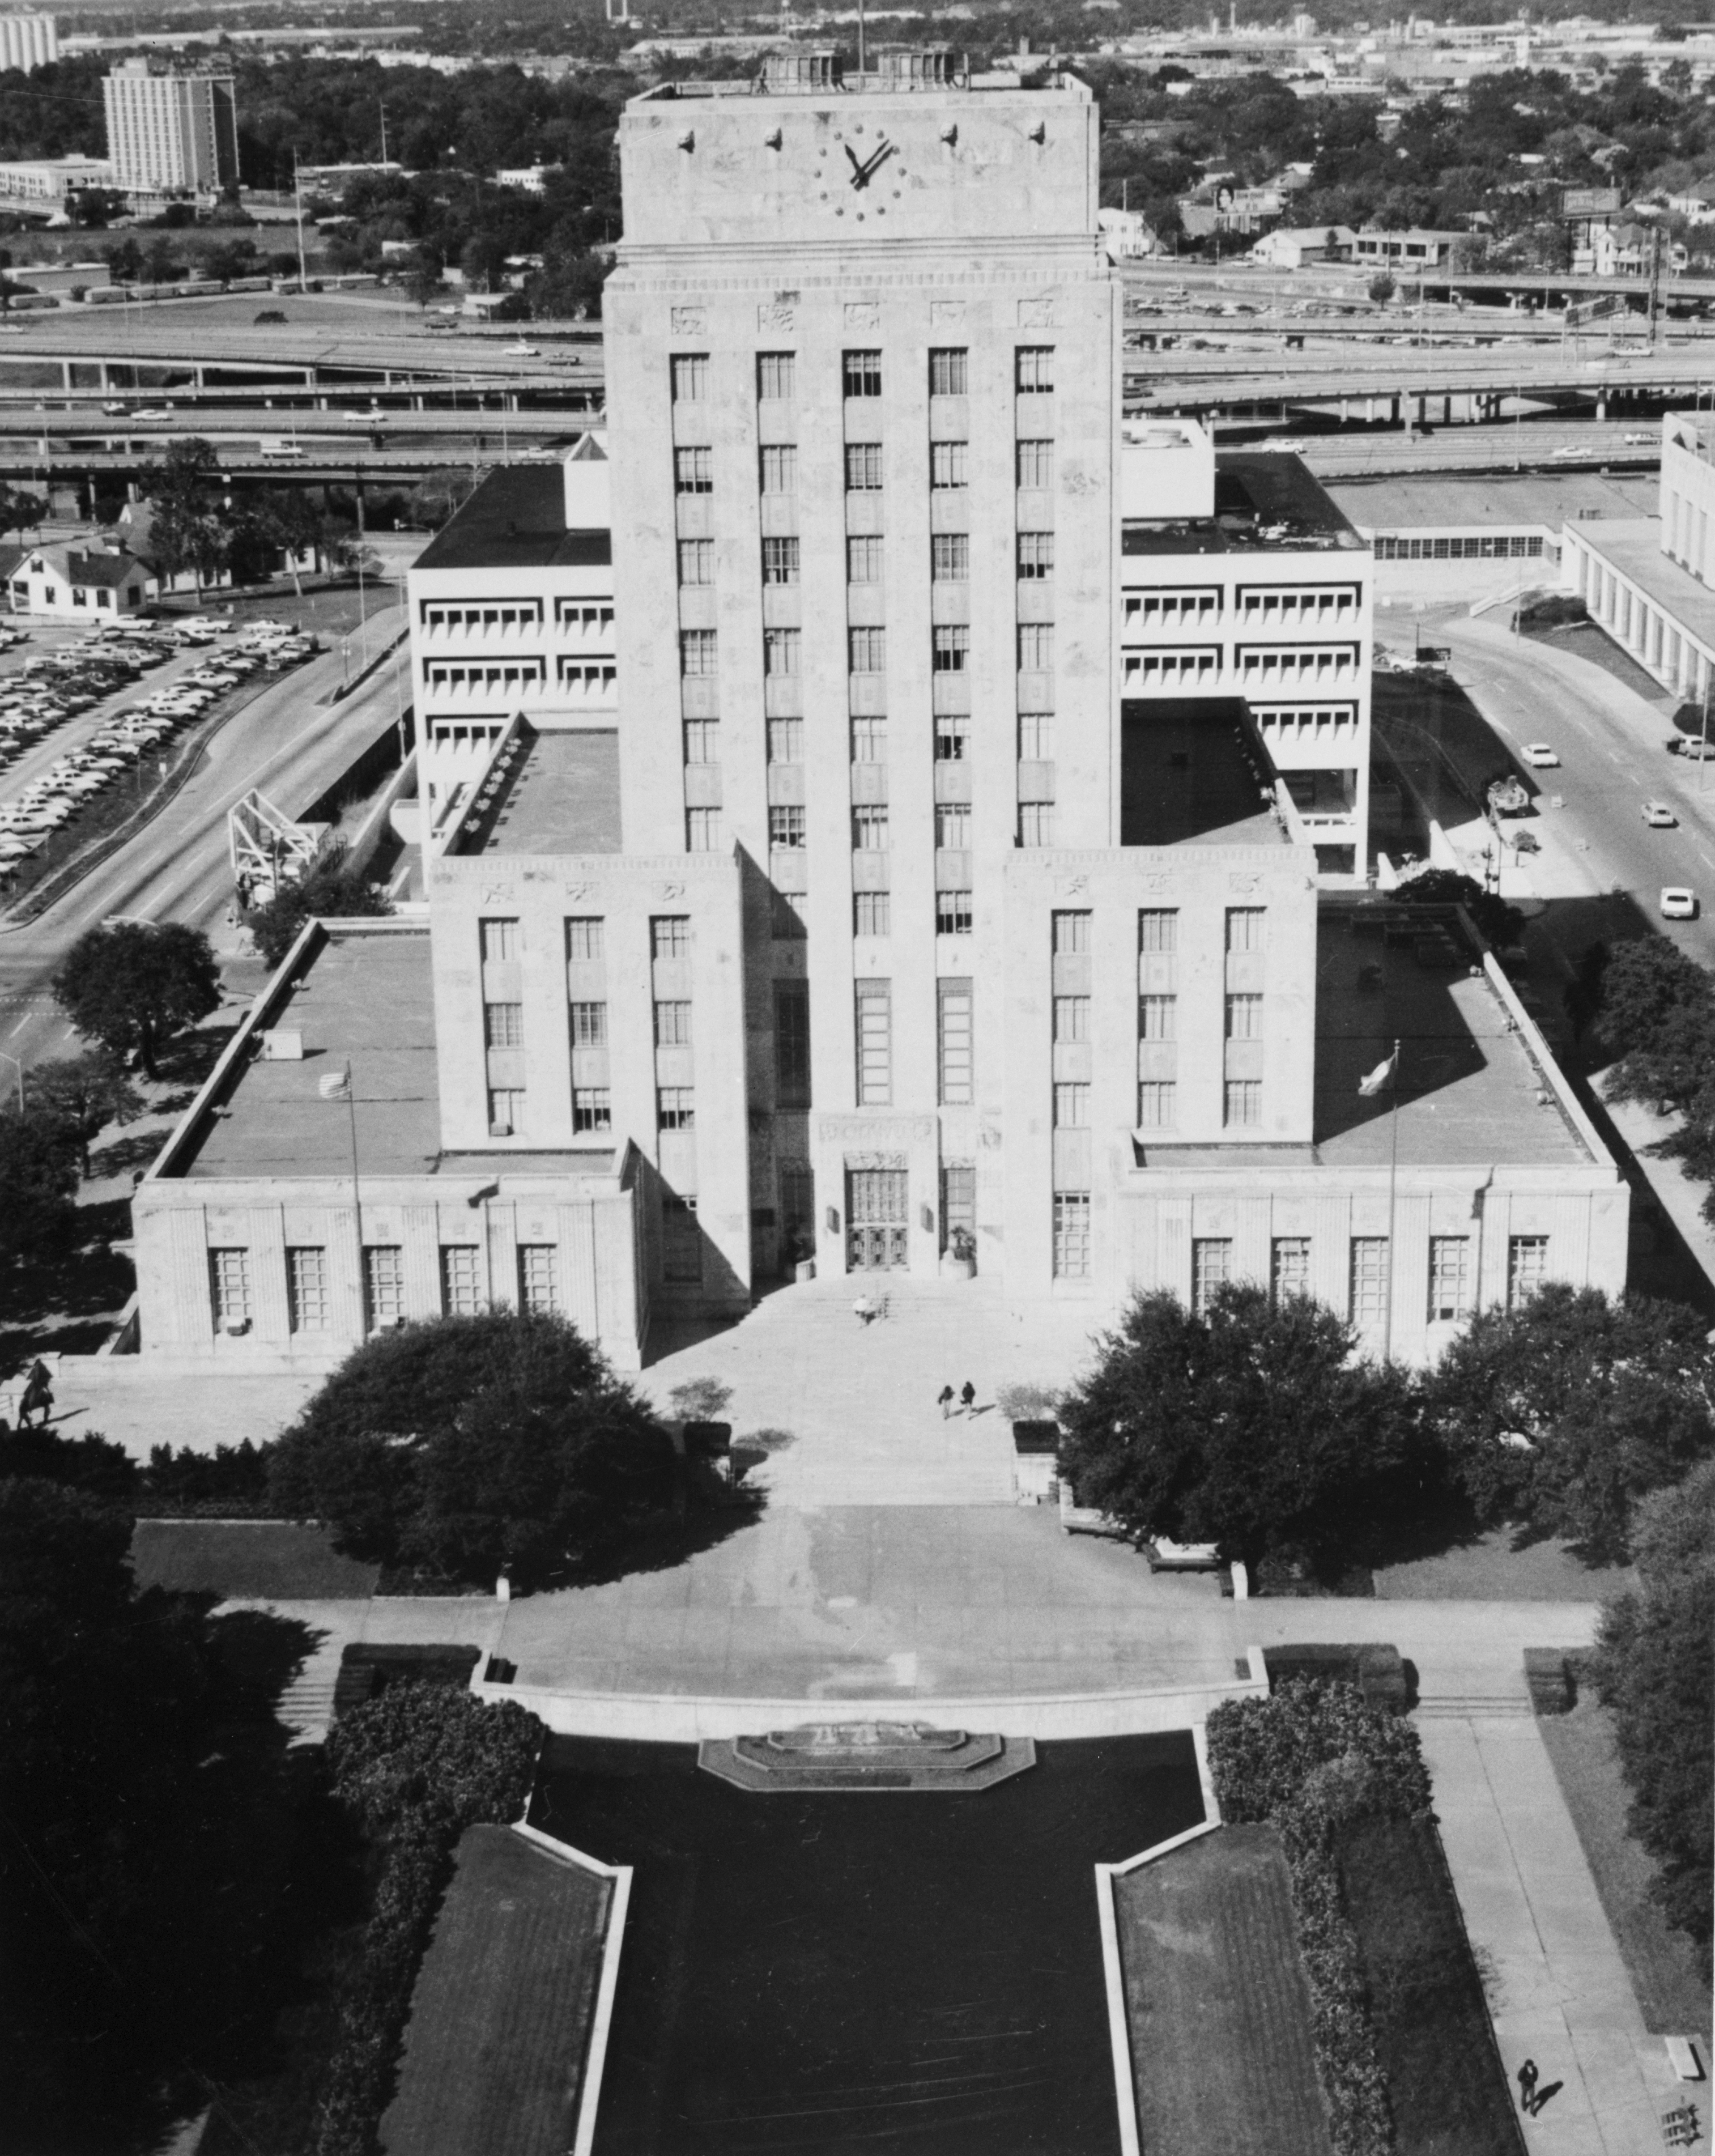 Photo of Houston City Hall